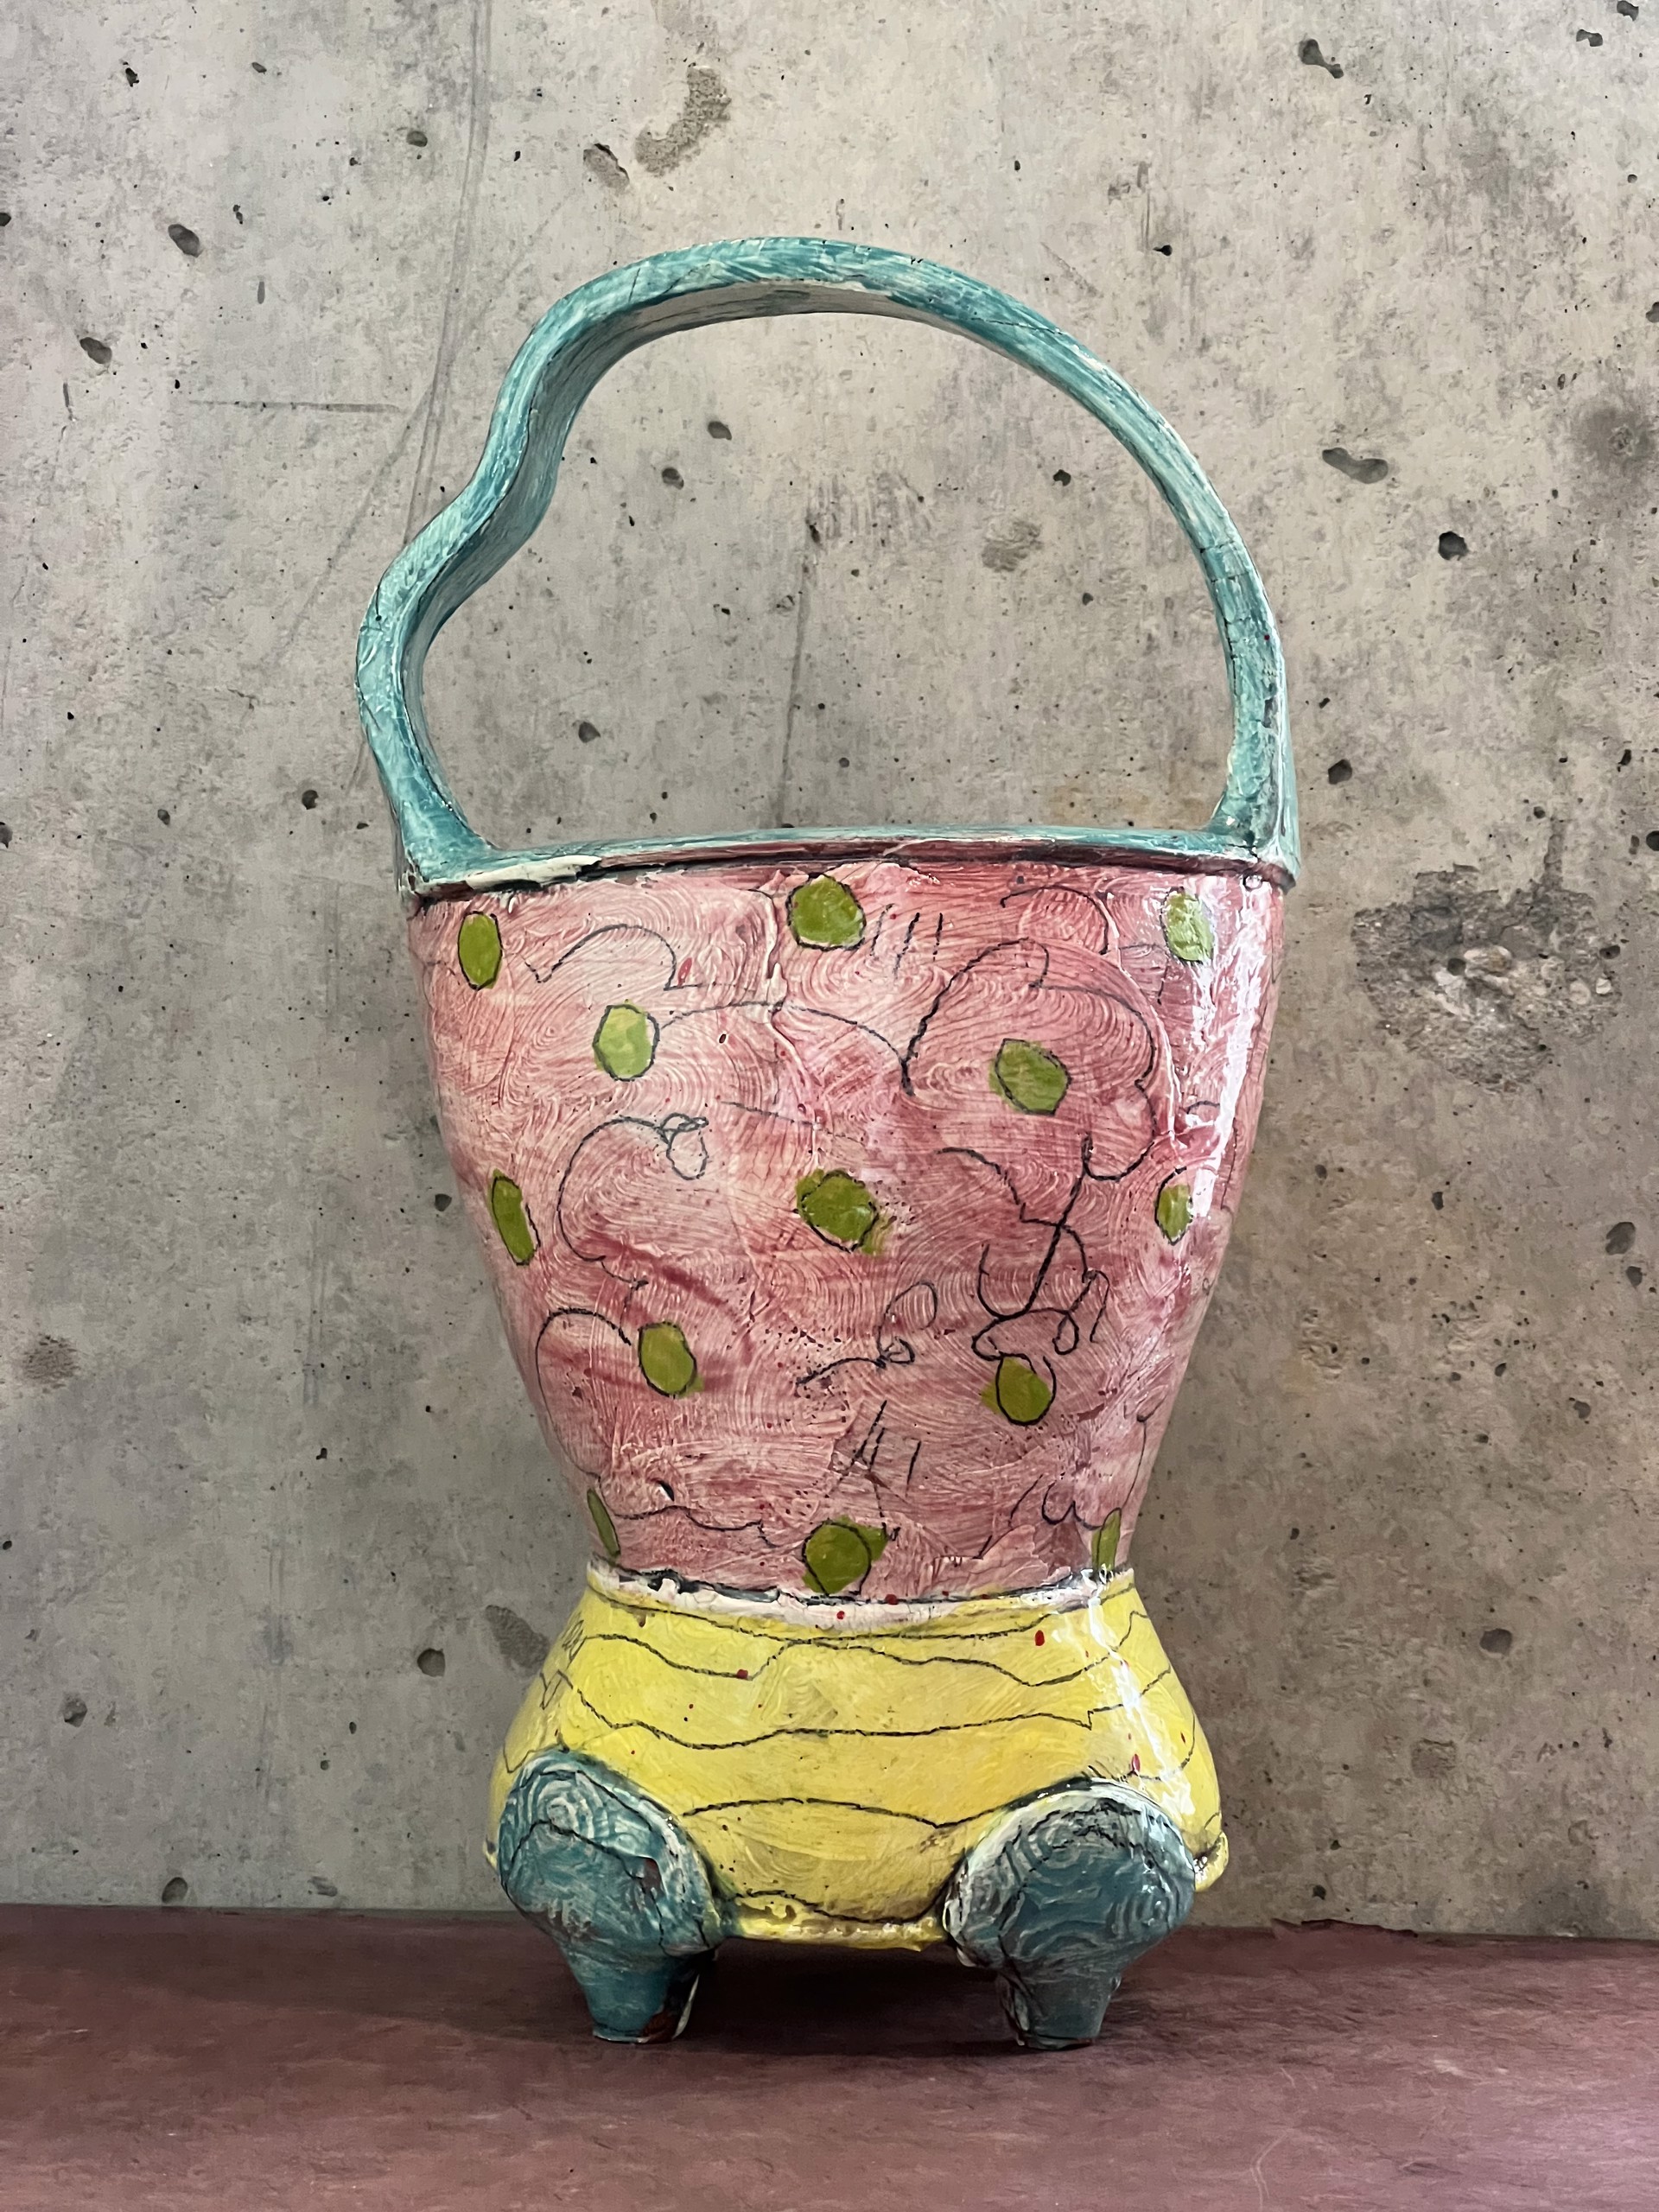 Basket by Susan McGilvrey